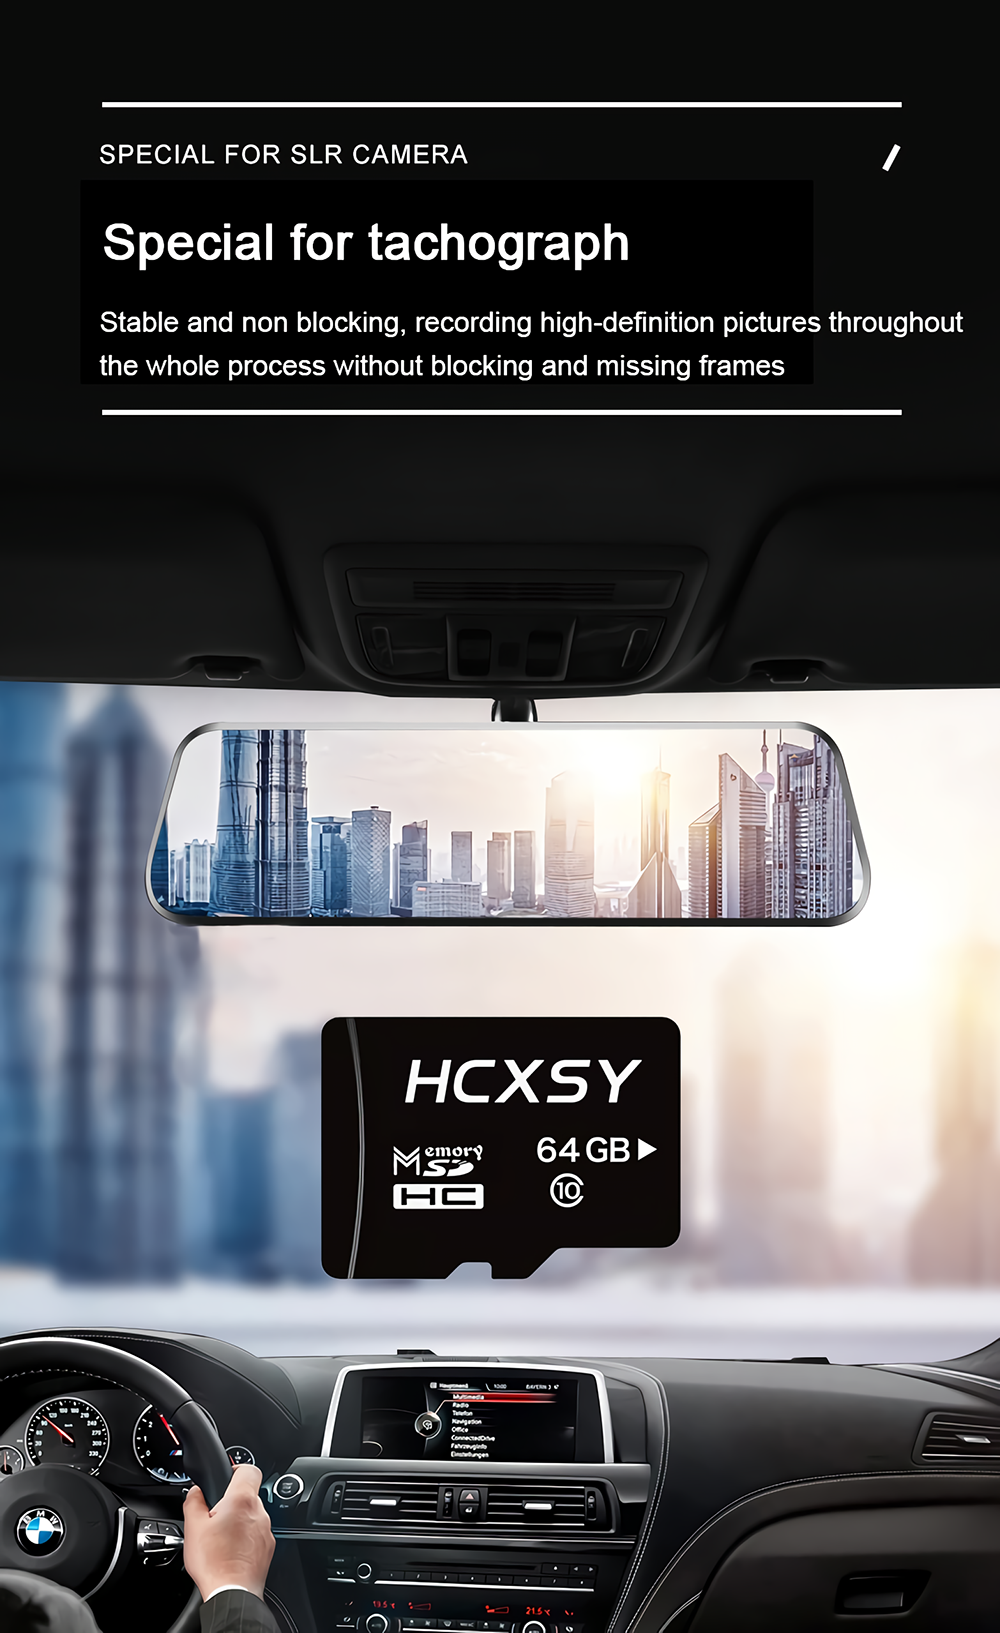 HCXSY-Class-10-U3-TF-Memory-Card-Up-to-90MBS-32G-64G-128G-256G-High-Speed-Memory-Flash-Card-Smart-Ca-1926867-10